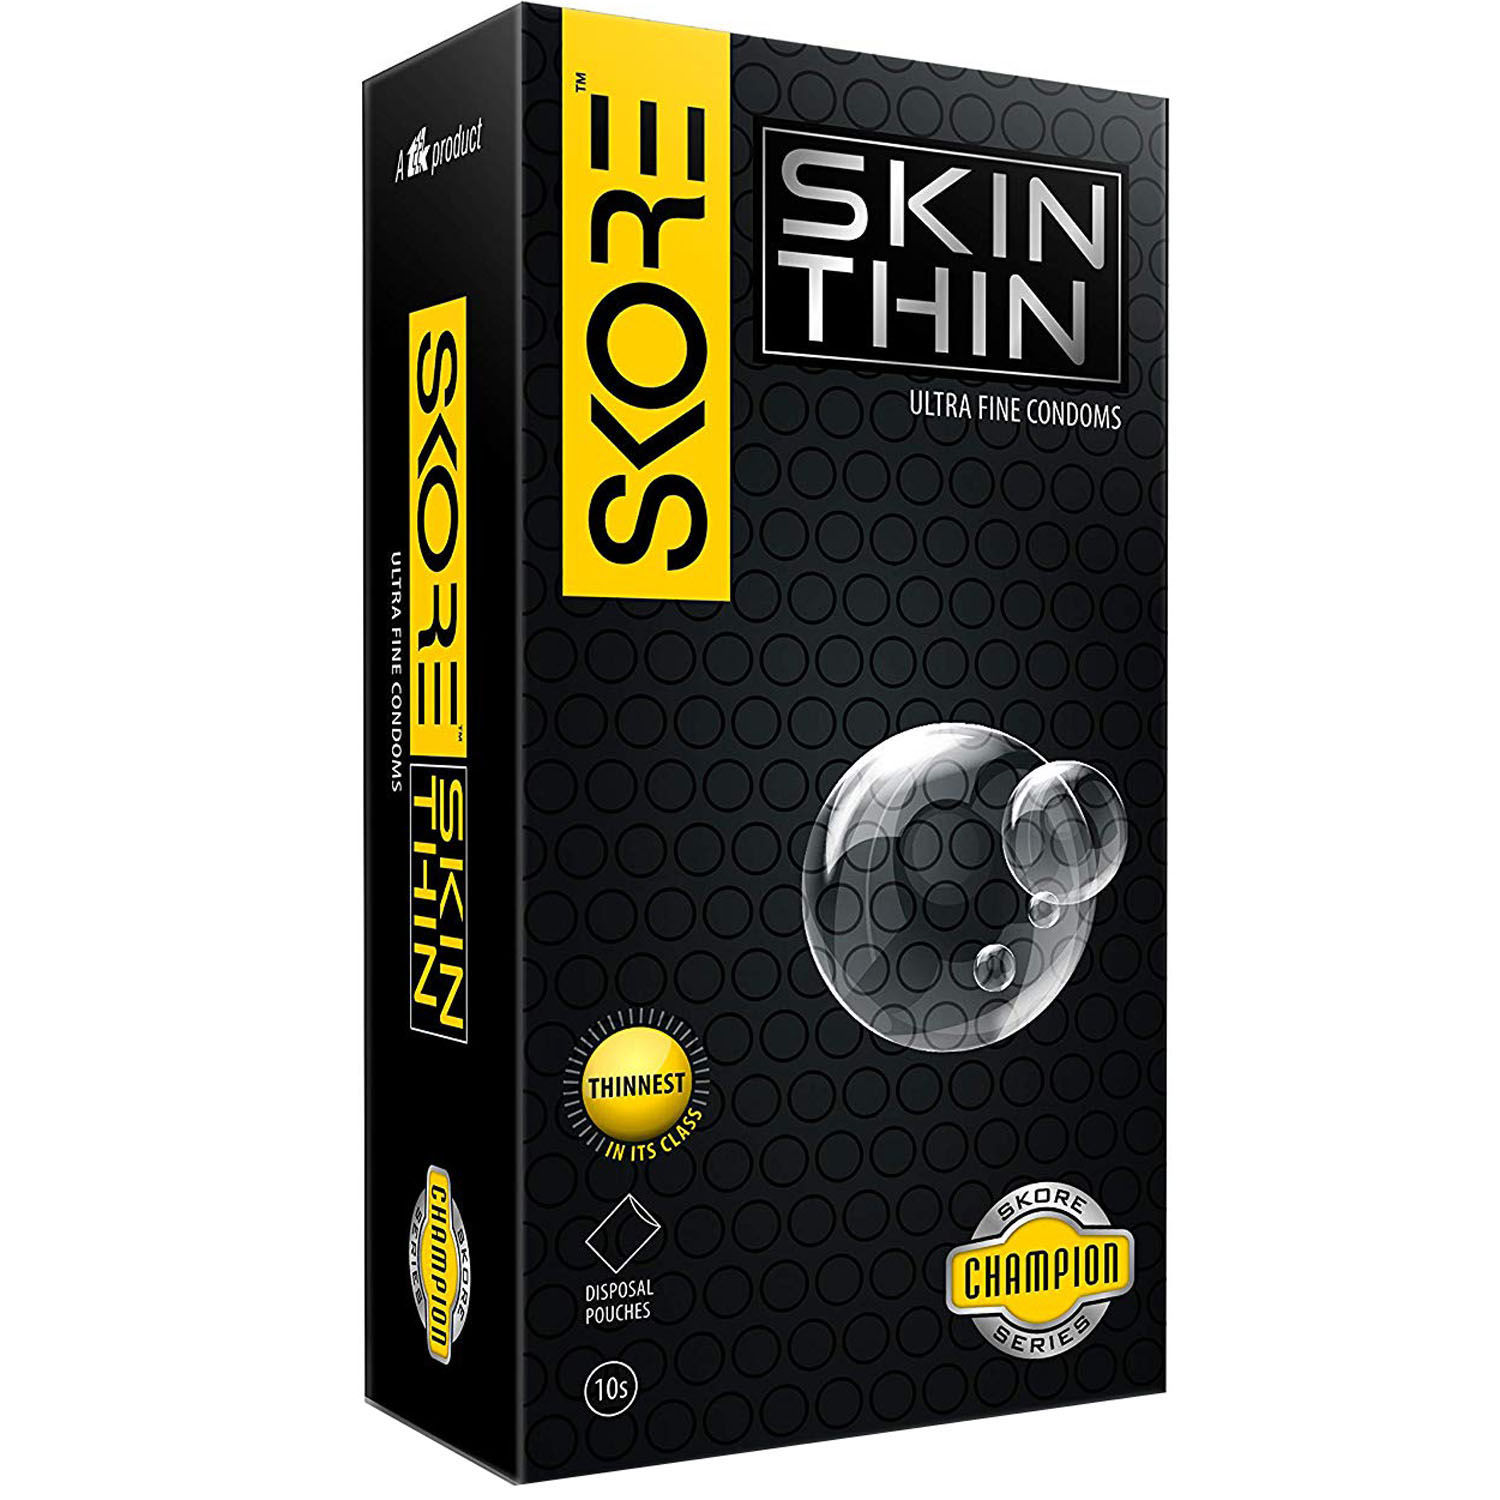 Skore Skin Thin Ultra Fine Condoms, 10 Count, Pack of 1 